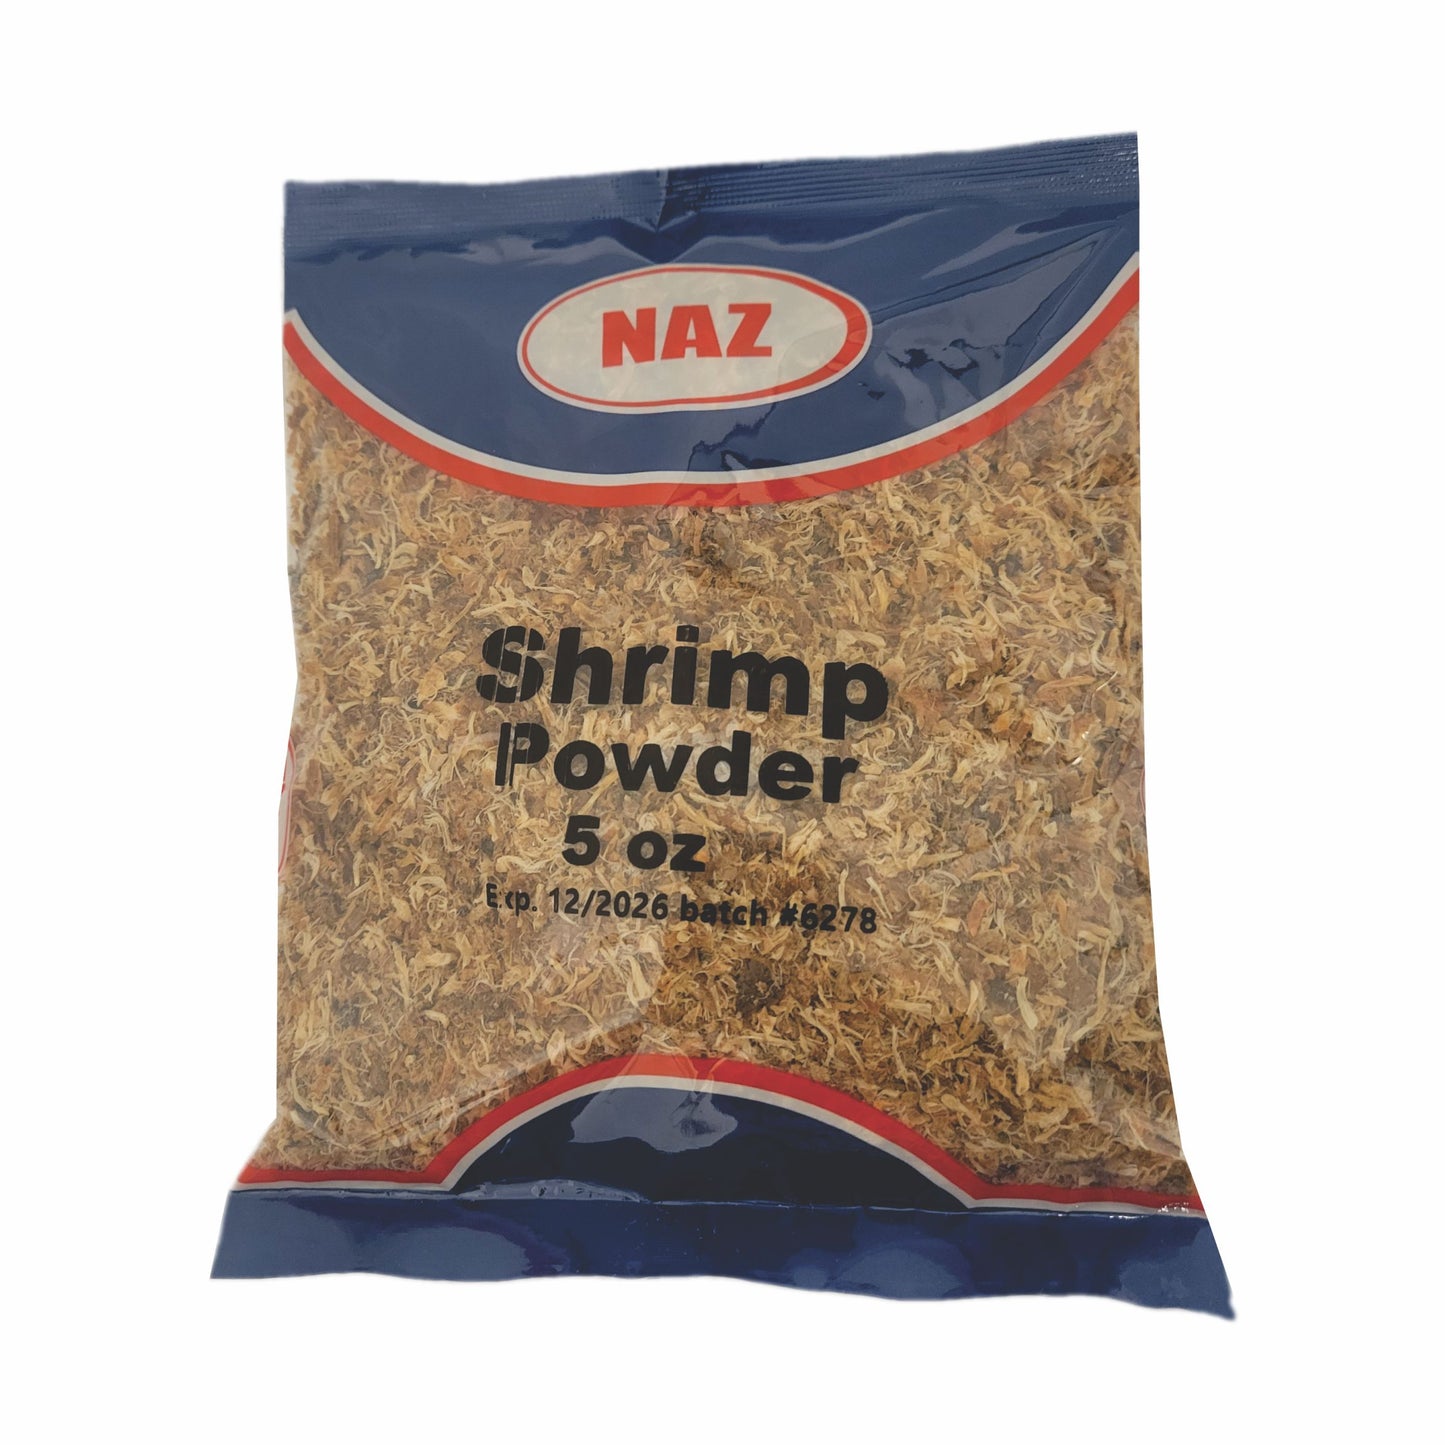 Naz Shrimp Powder 5oz